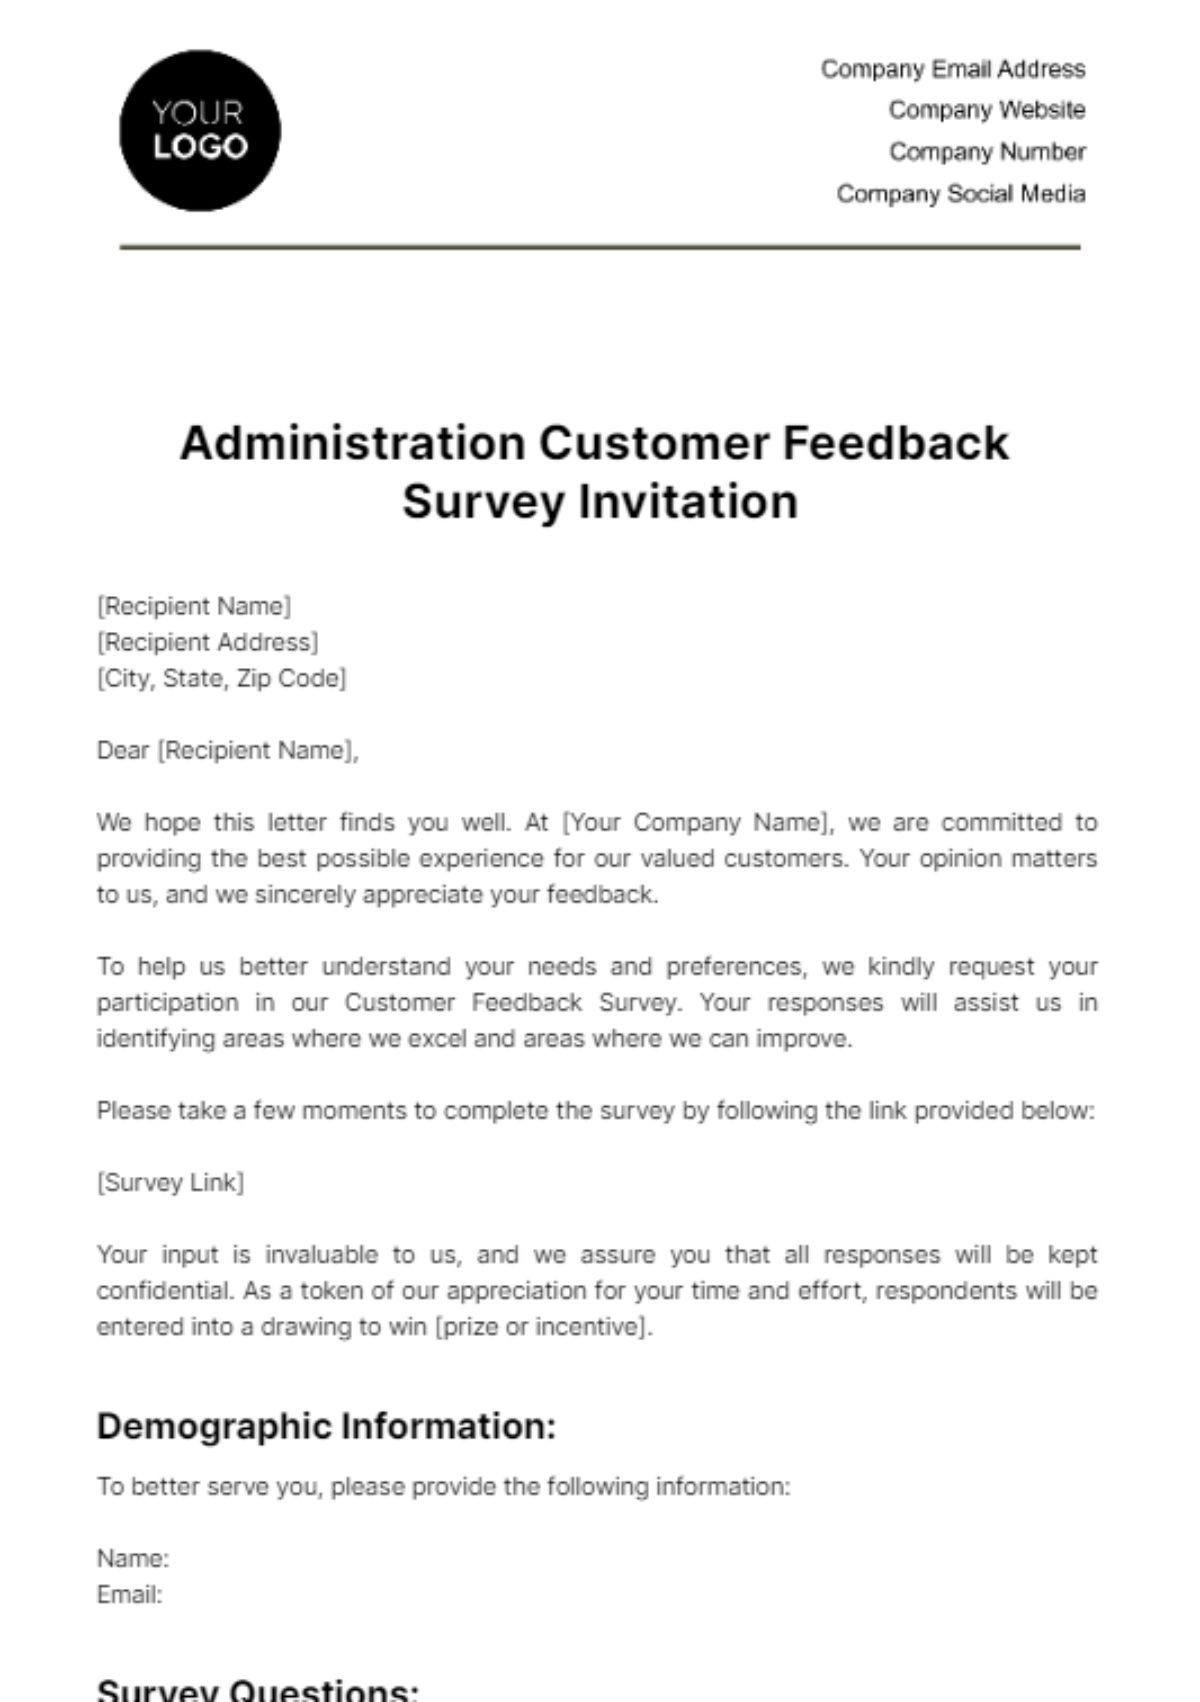 Free Administration Customer Feedback Survey Invitation Template